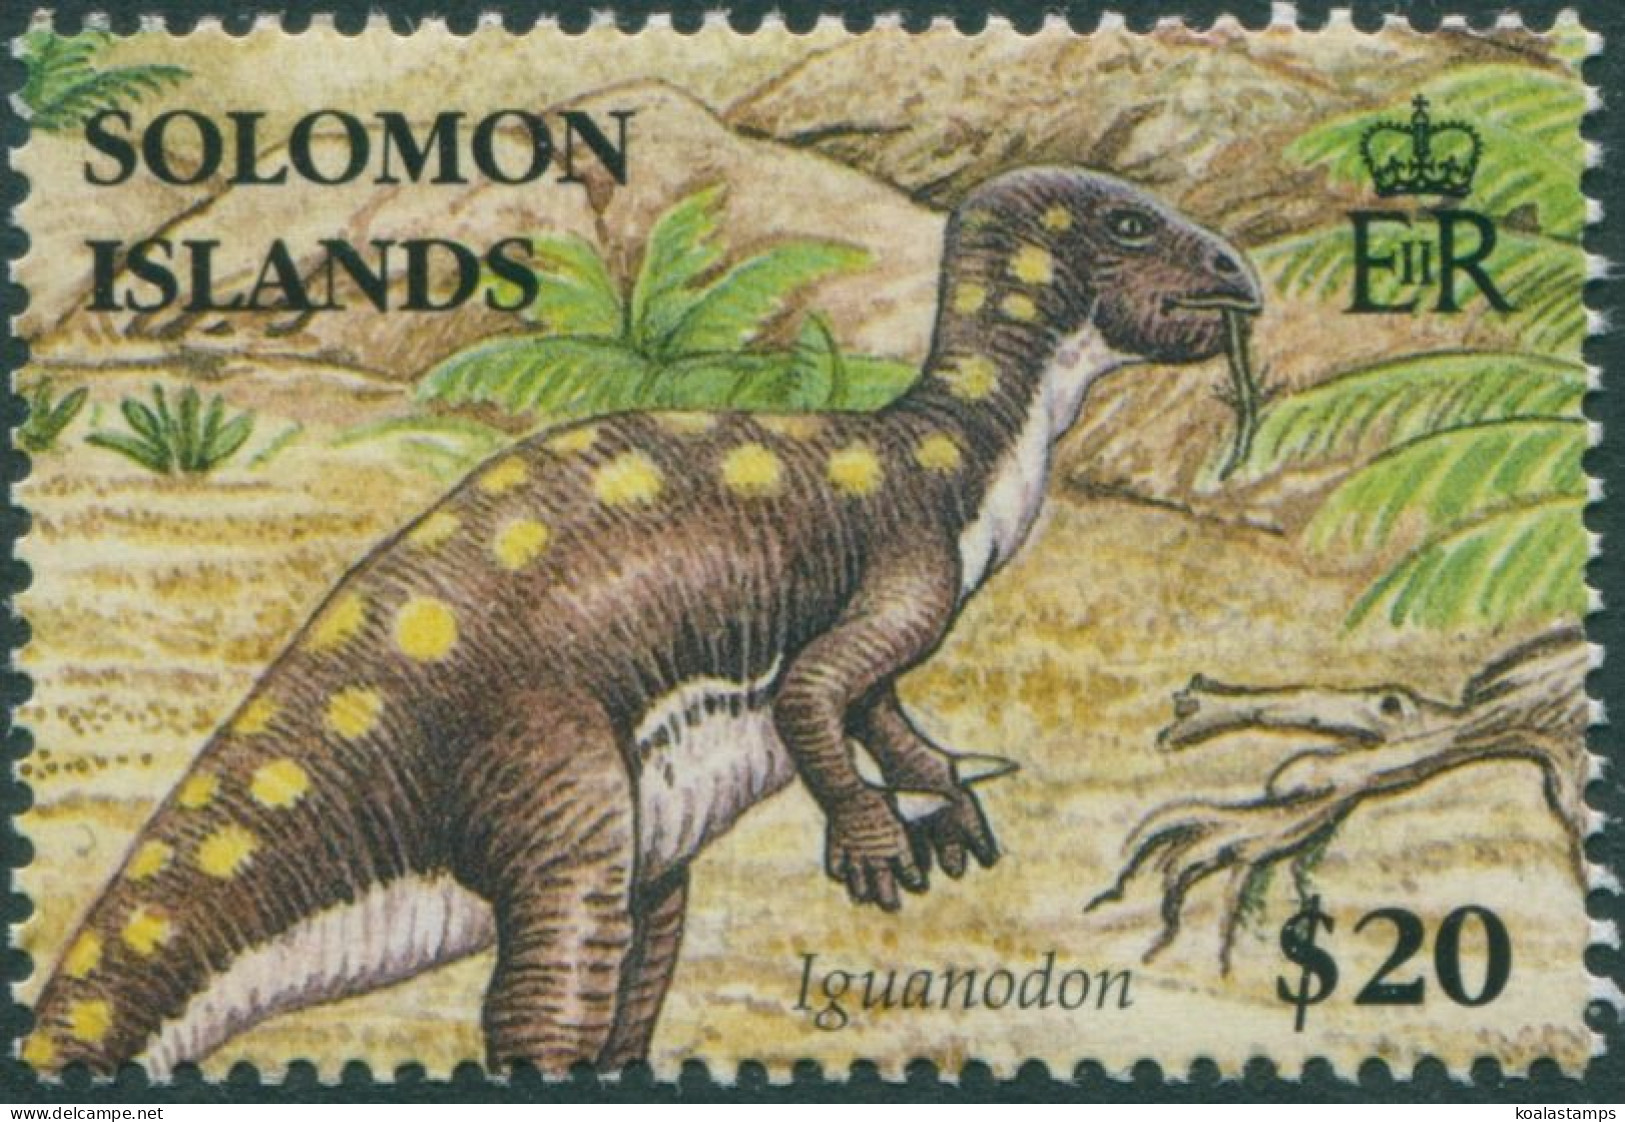 Solomon Islands 2006 SG1201 $20 Dinosaur MNH - Salomoninseln (Salomonen 1978-...)